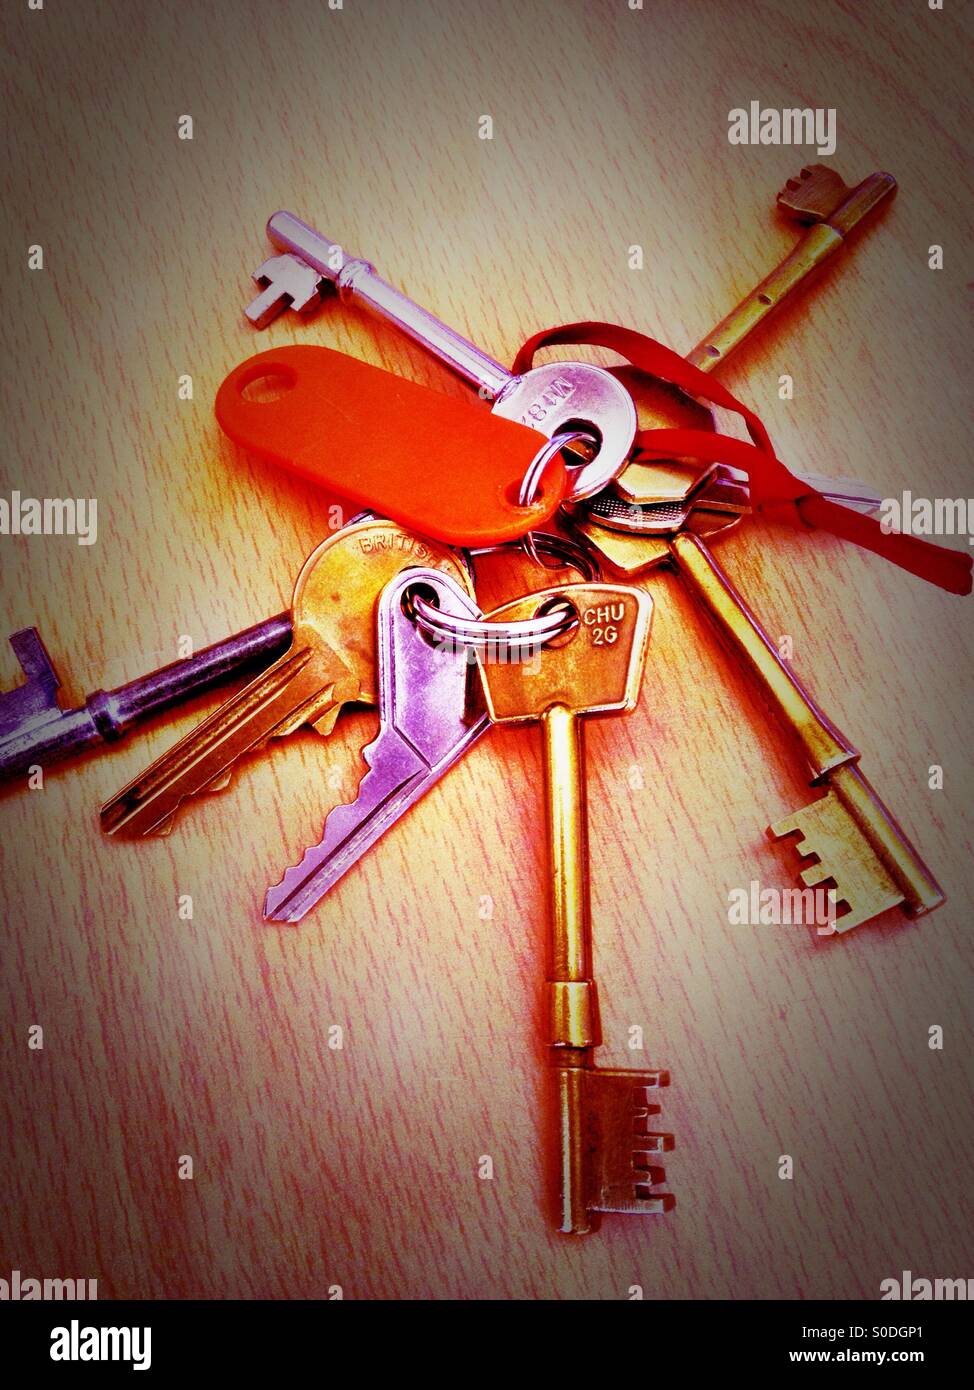 A bunch of keys. Stock Photo